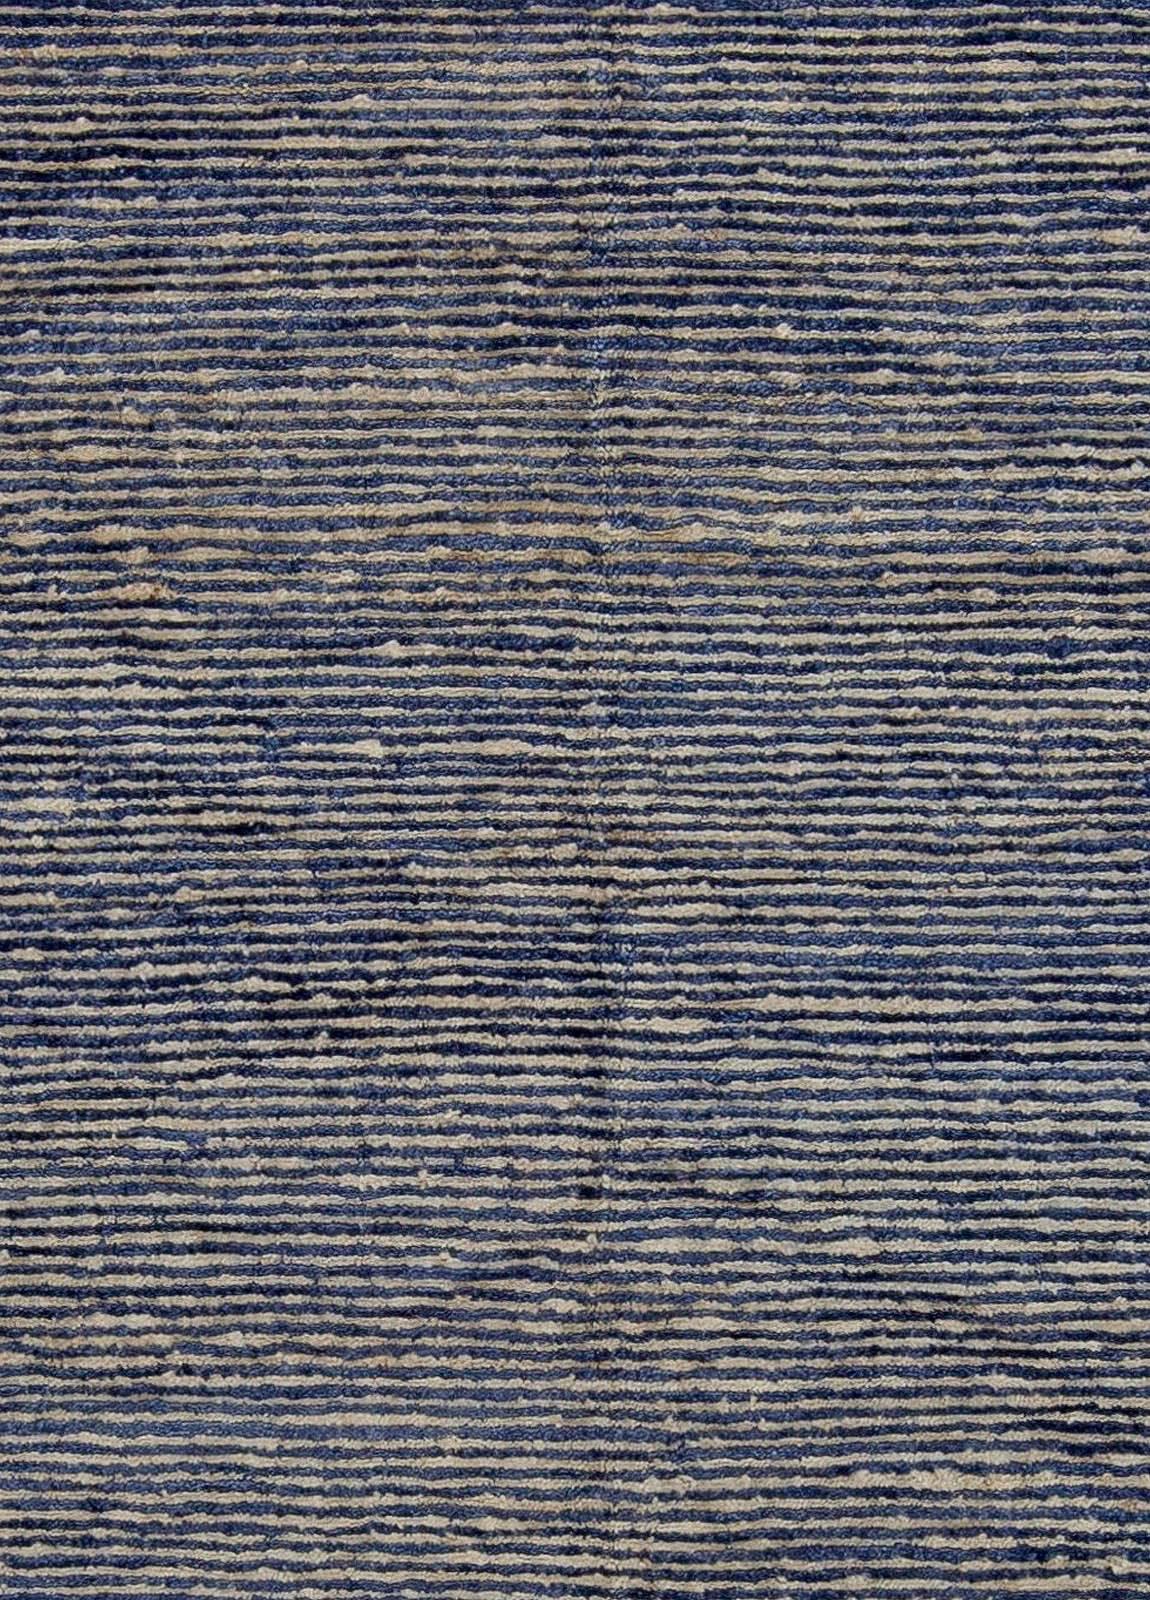 Modern striped handmade hemp and silk rug by Doris Leslie Blau.
Size: 10'8